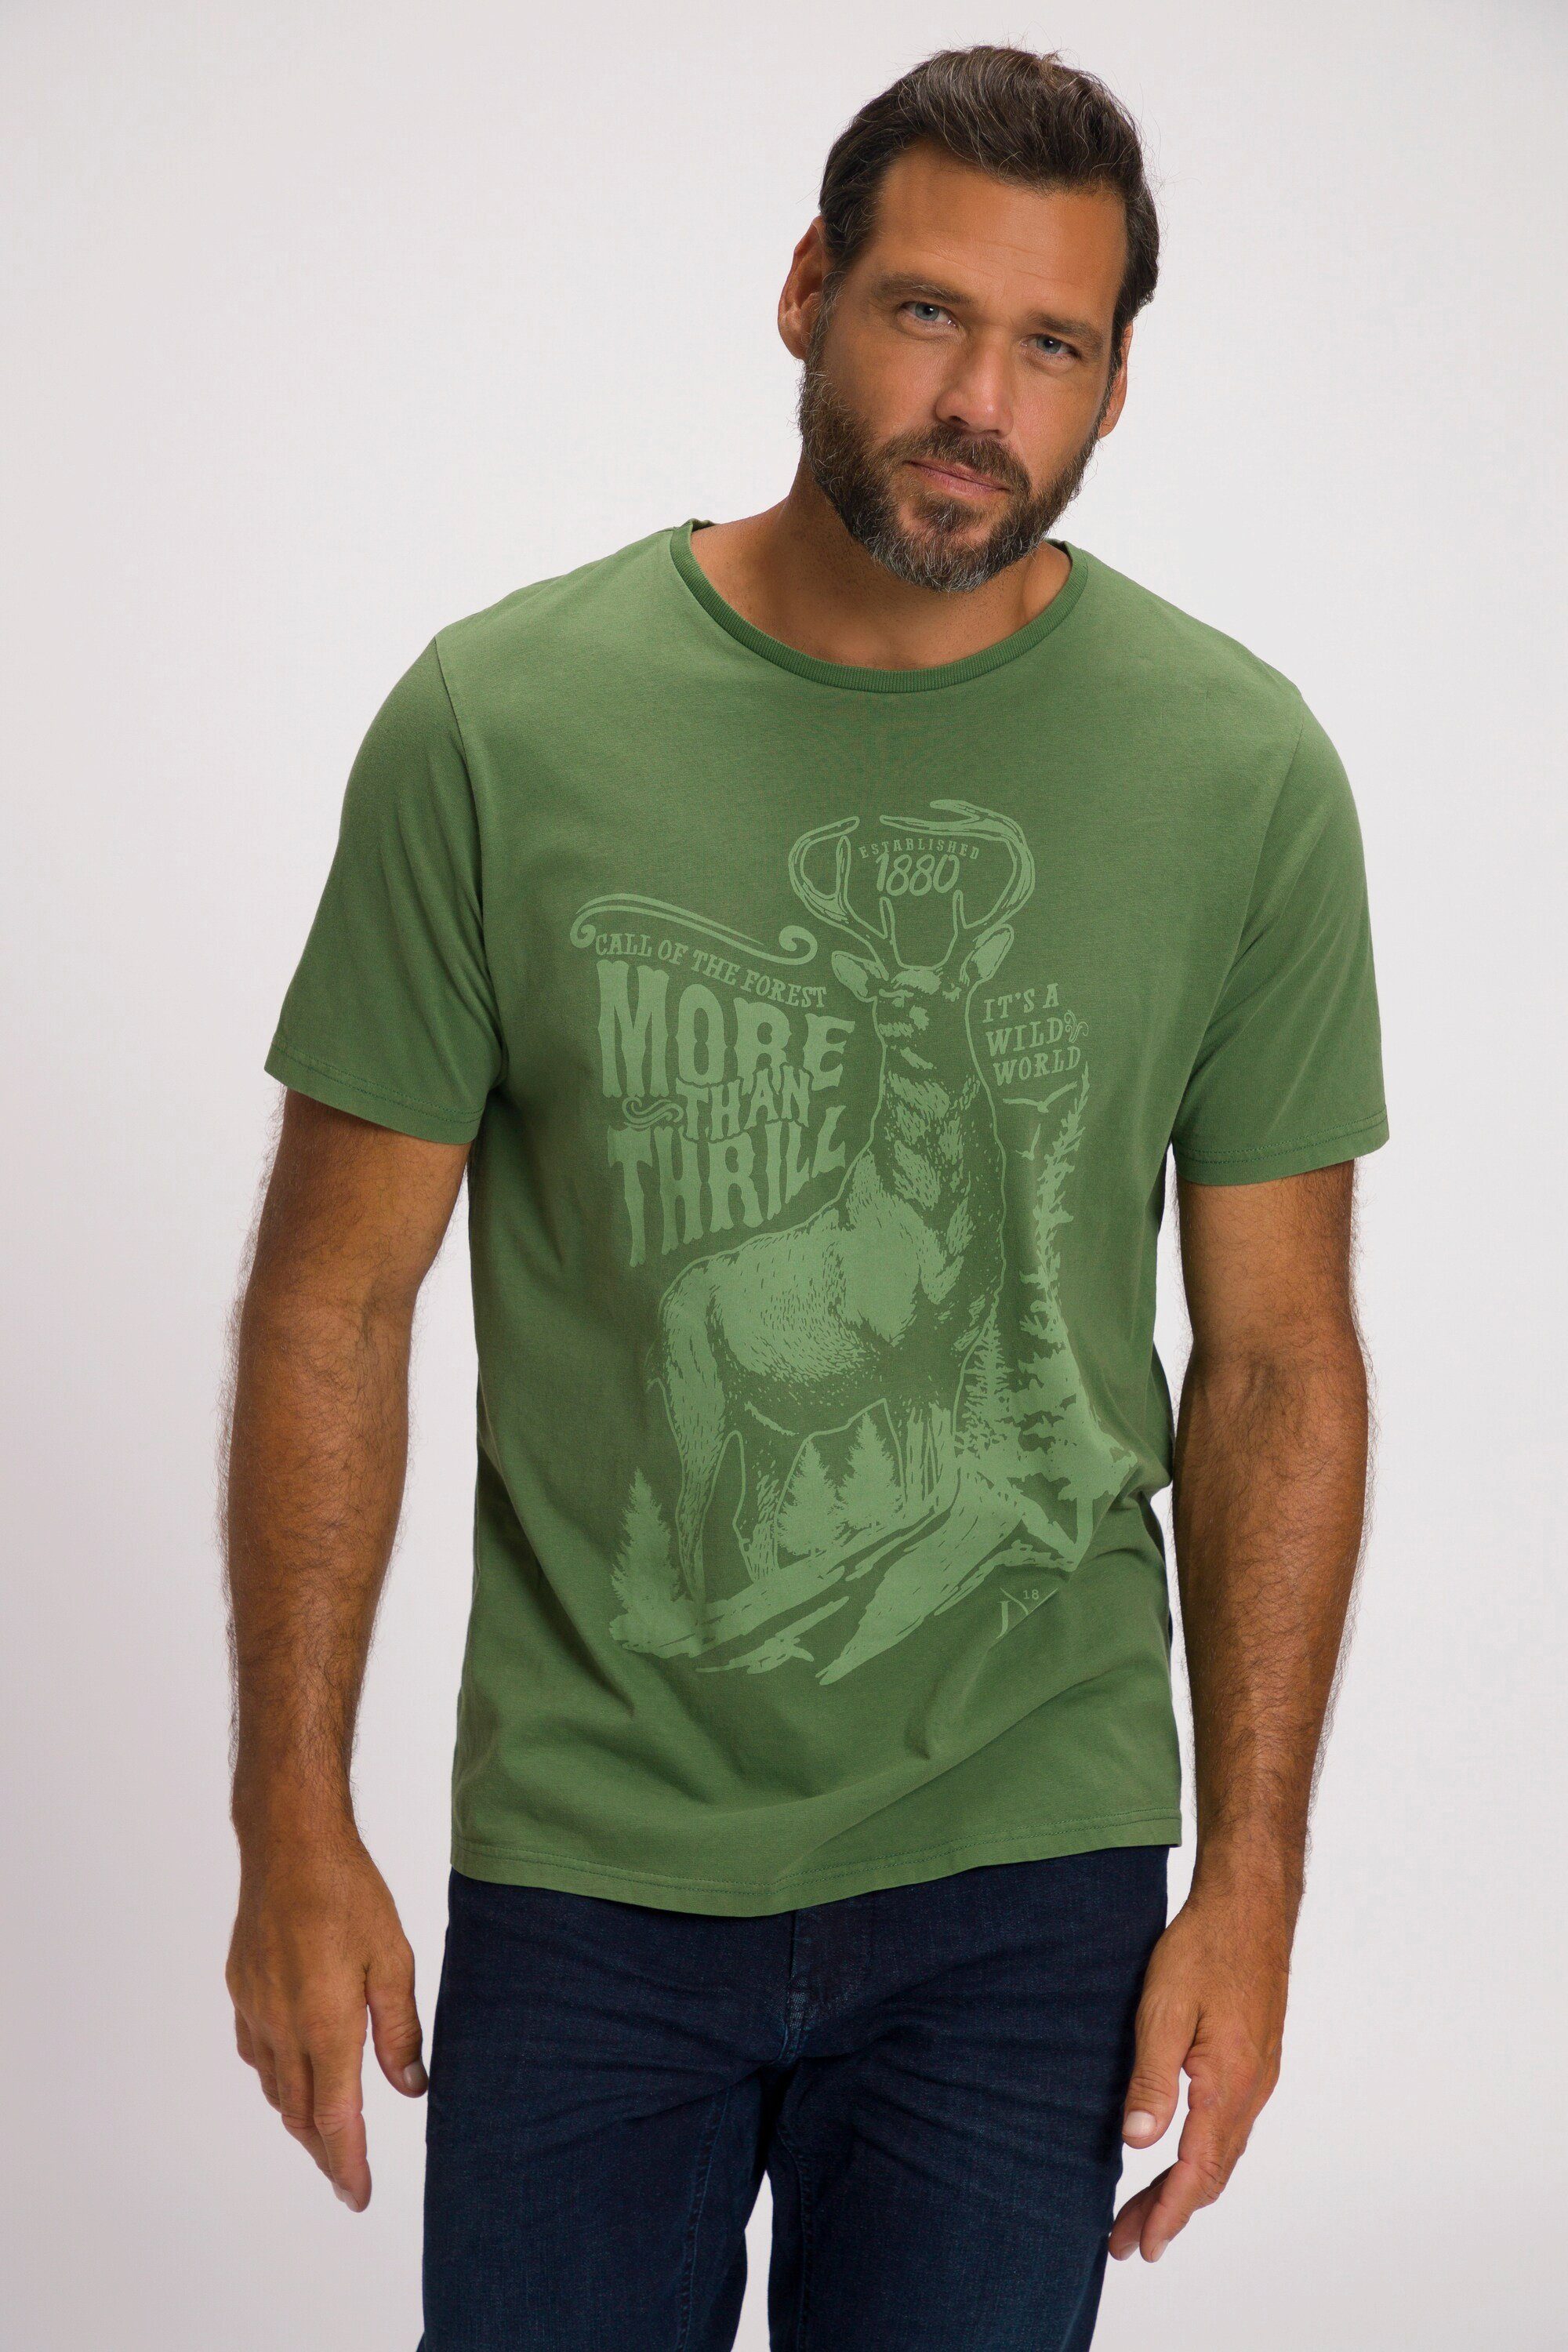 JP1880 T-Shirt T-Shirt Tracht Vintage Look XL Print Halbarm hell oliv